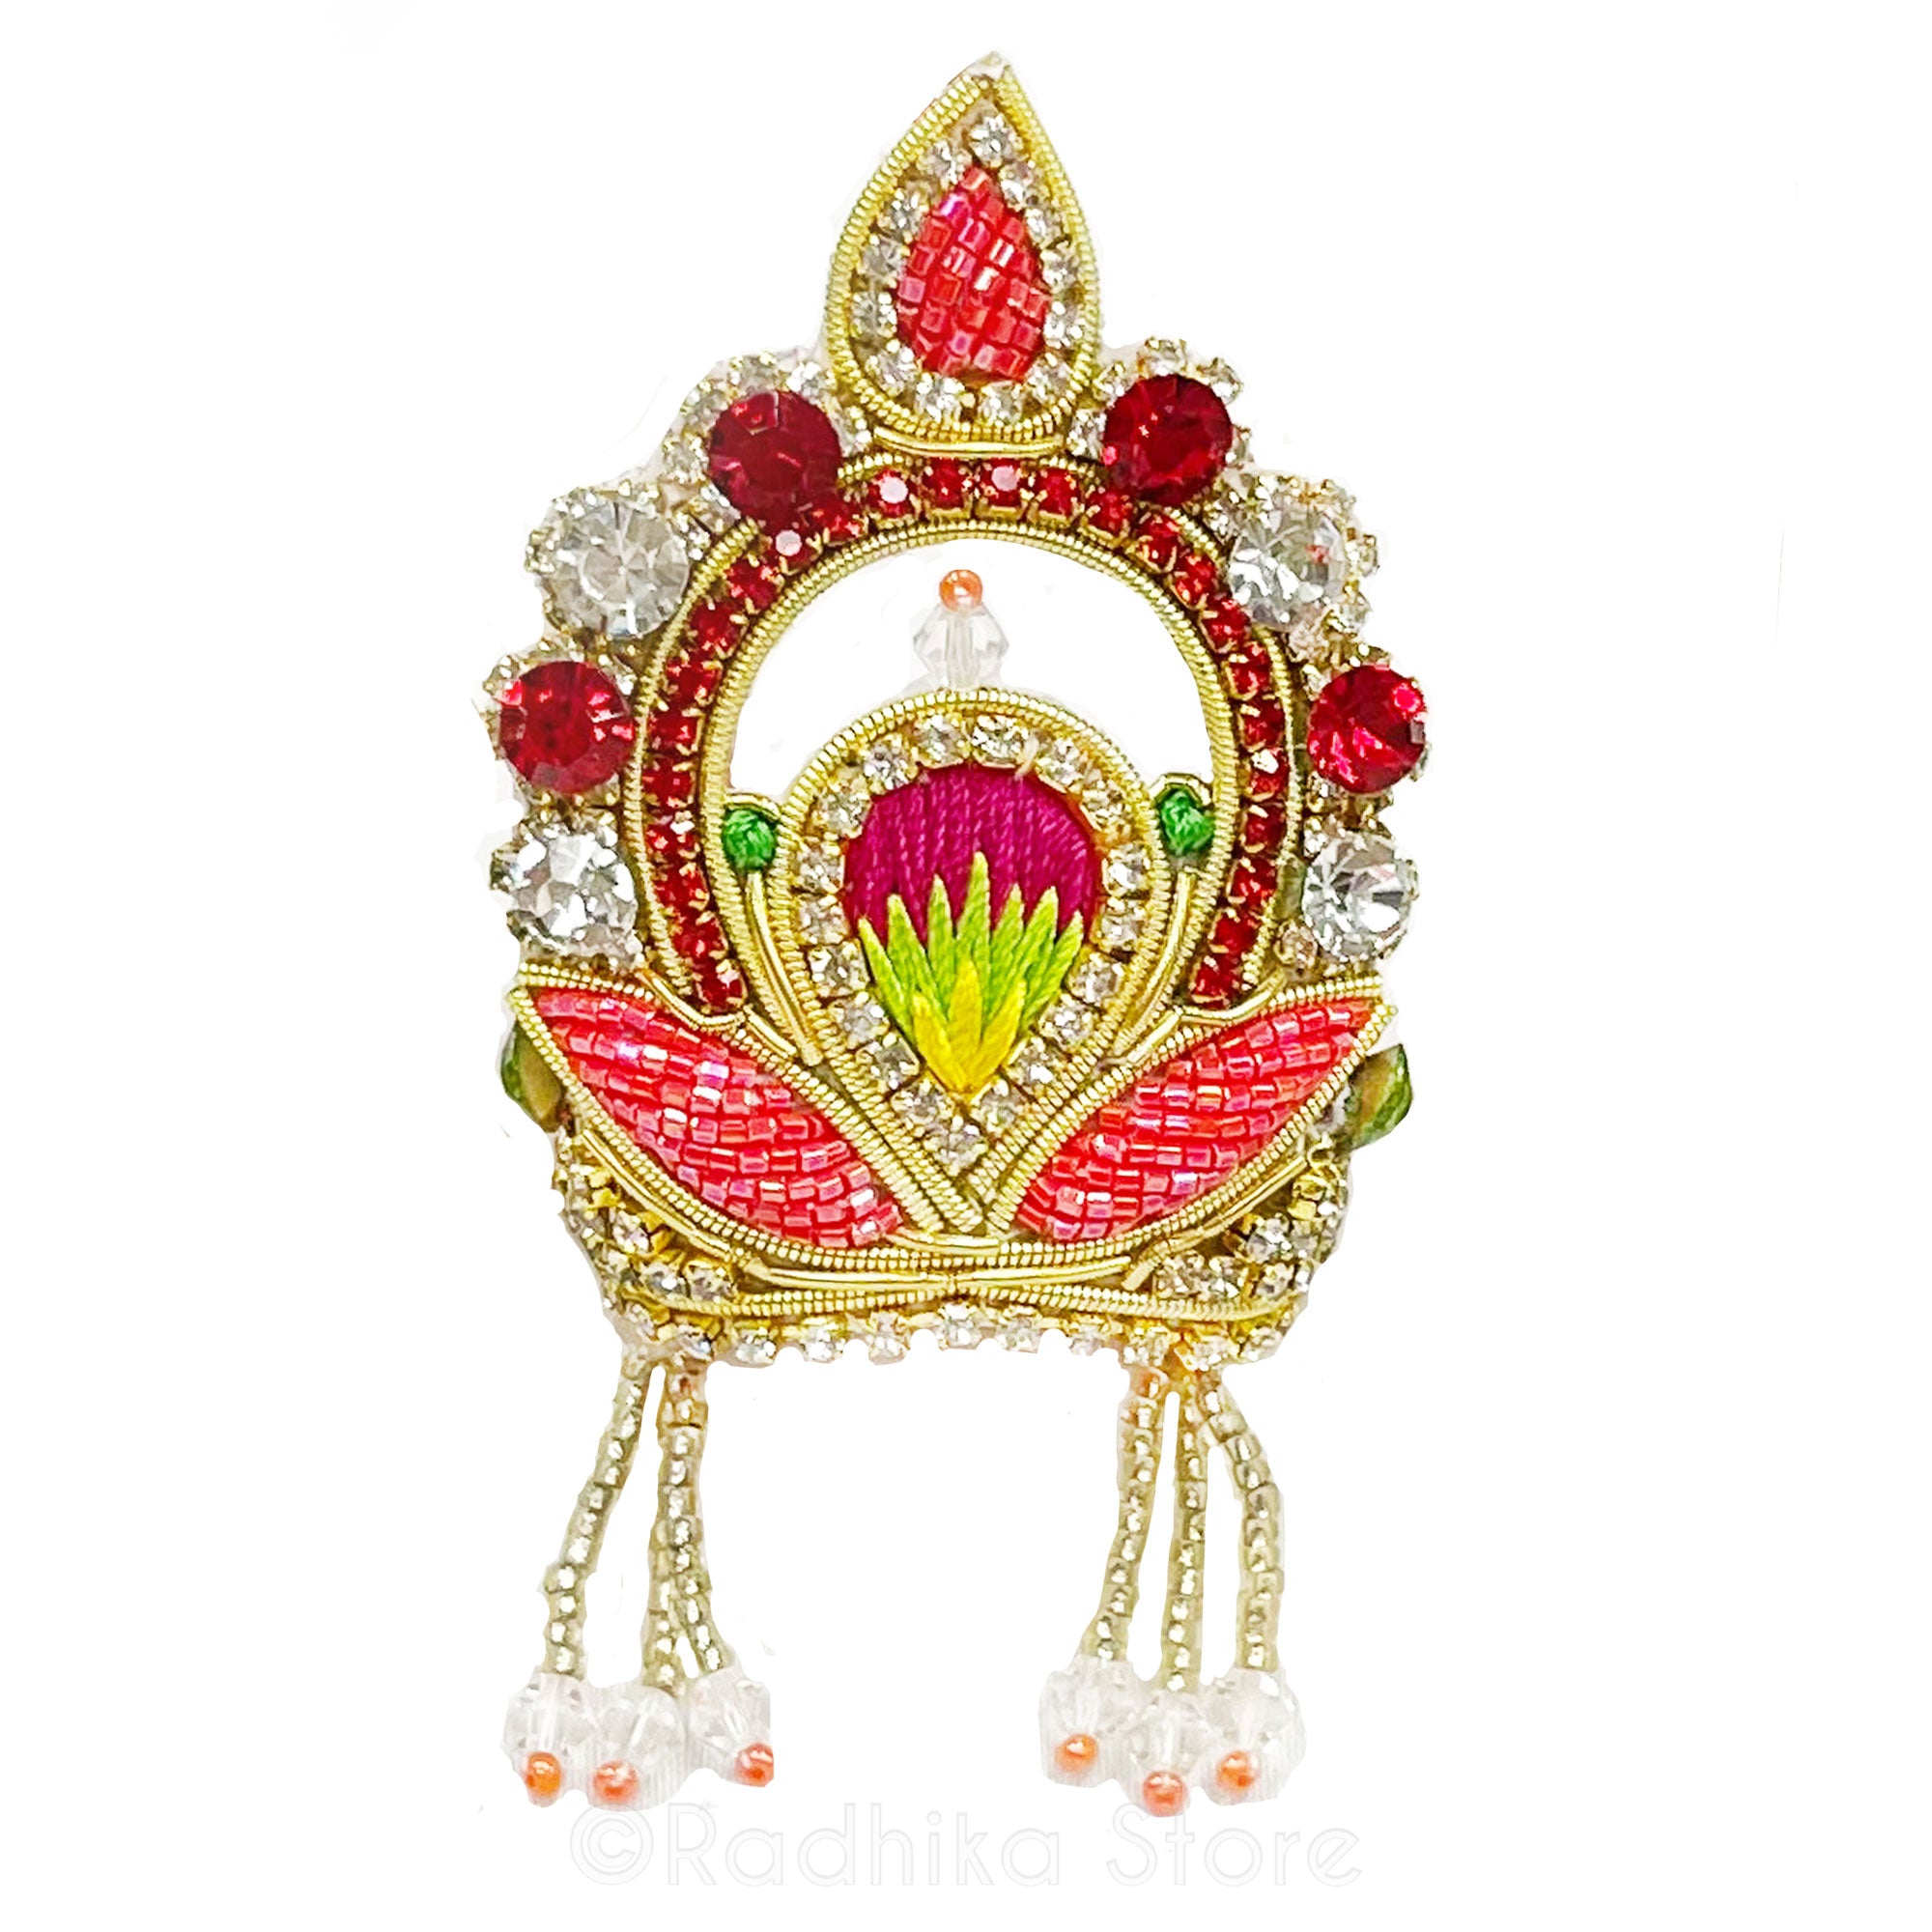 Radhika Effulgent Flower - Deity Crown